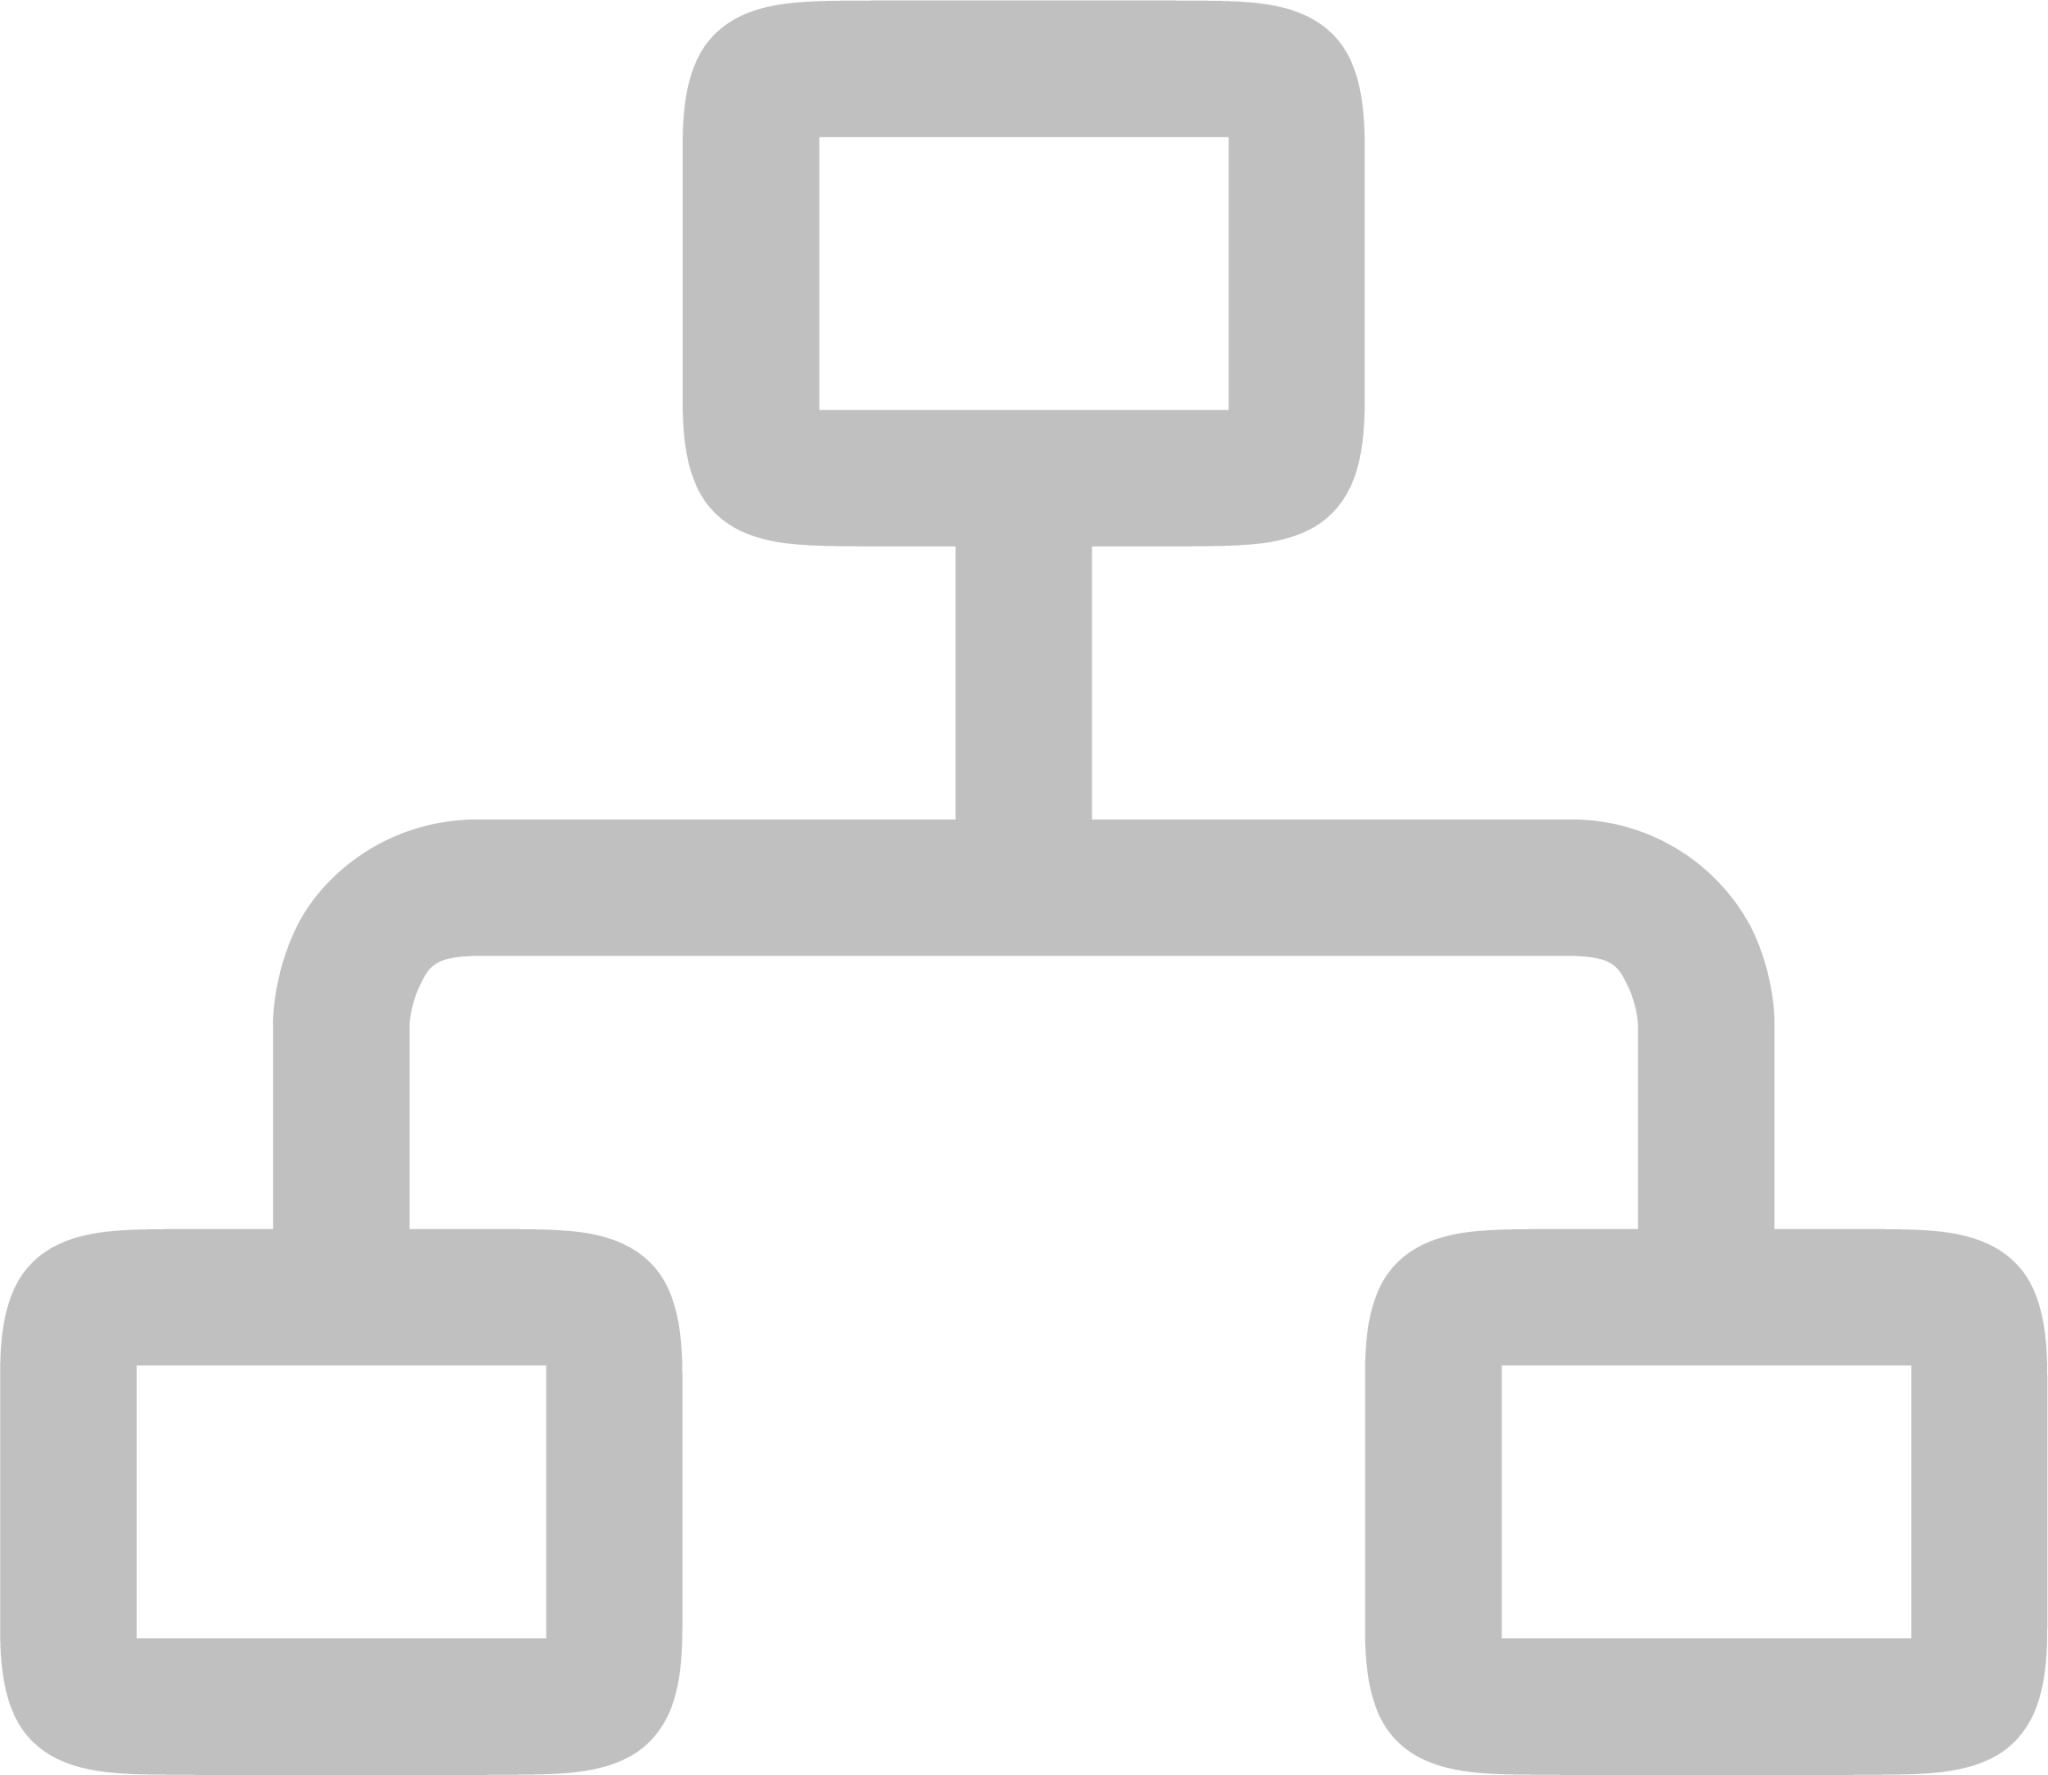 network offline symbolic icon